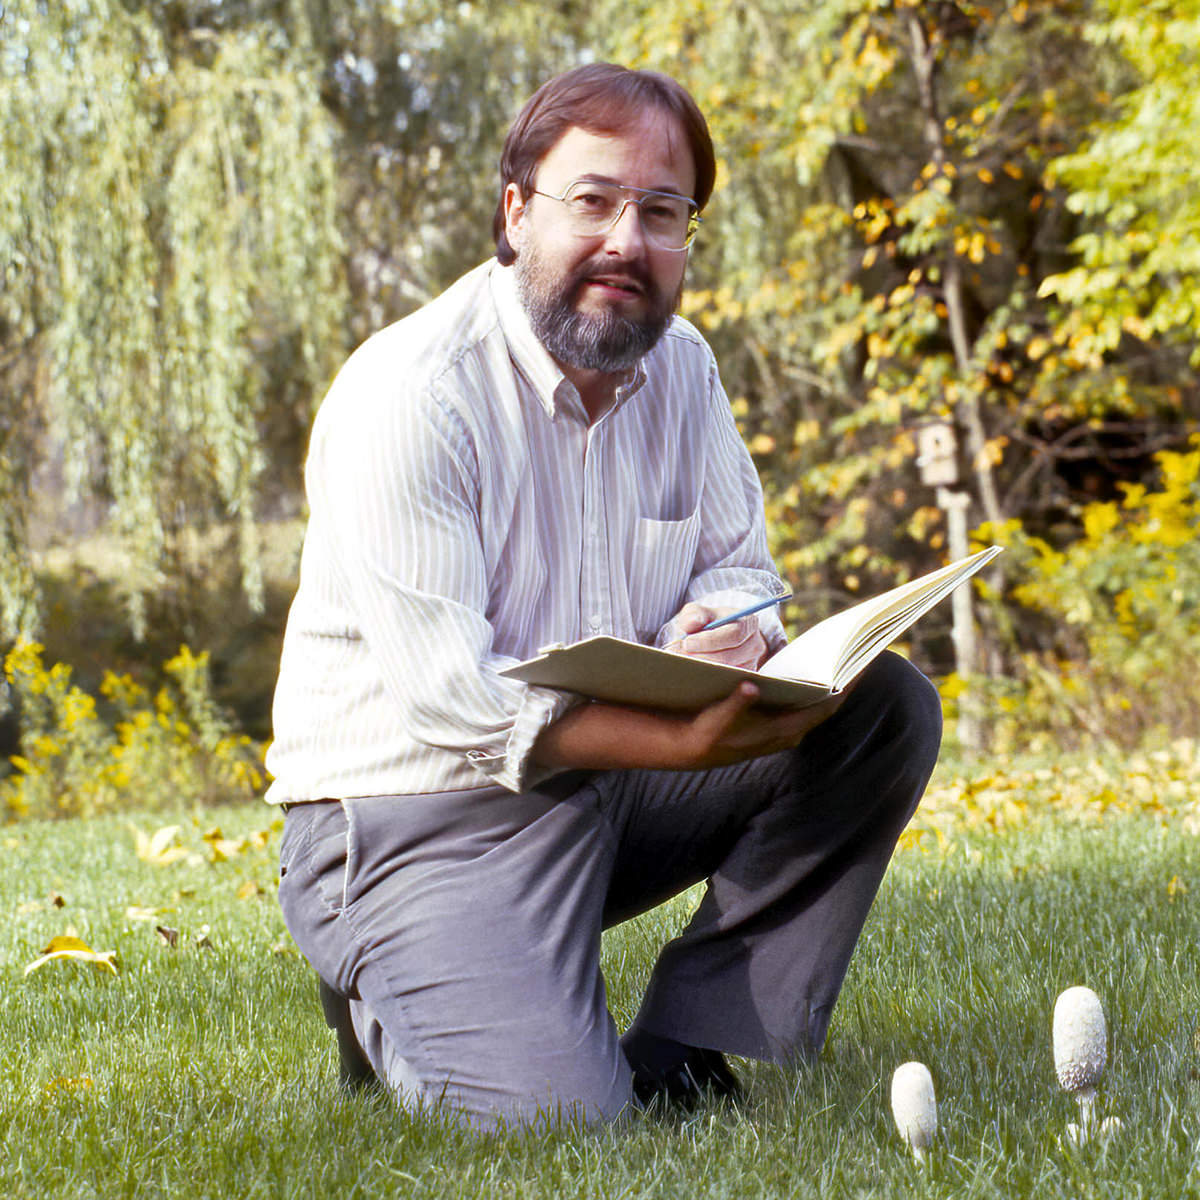 Glen Loates outside by mushrooms kneeling with sketchbook and smiling